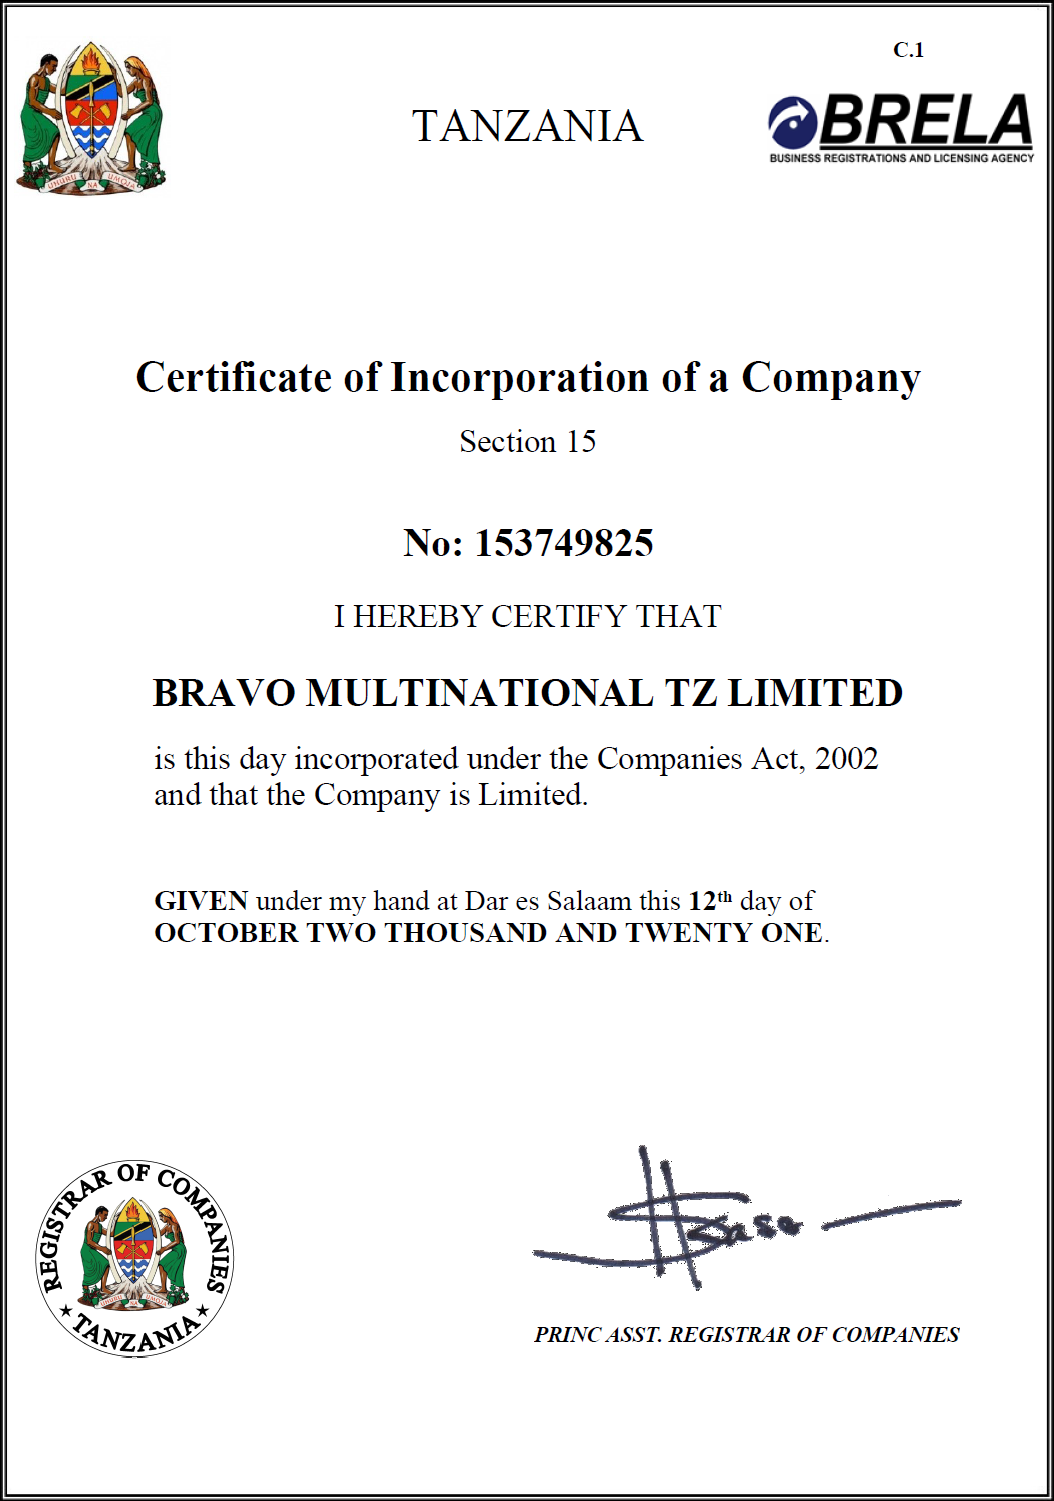 Bravo Multinational TZ Limited